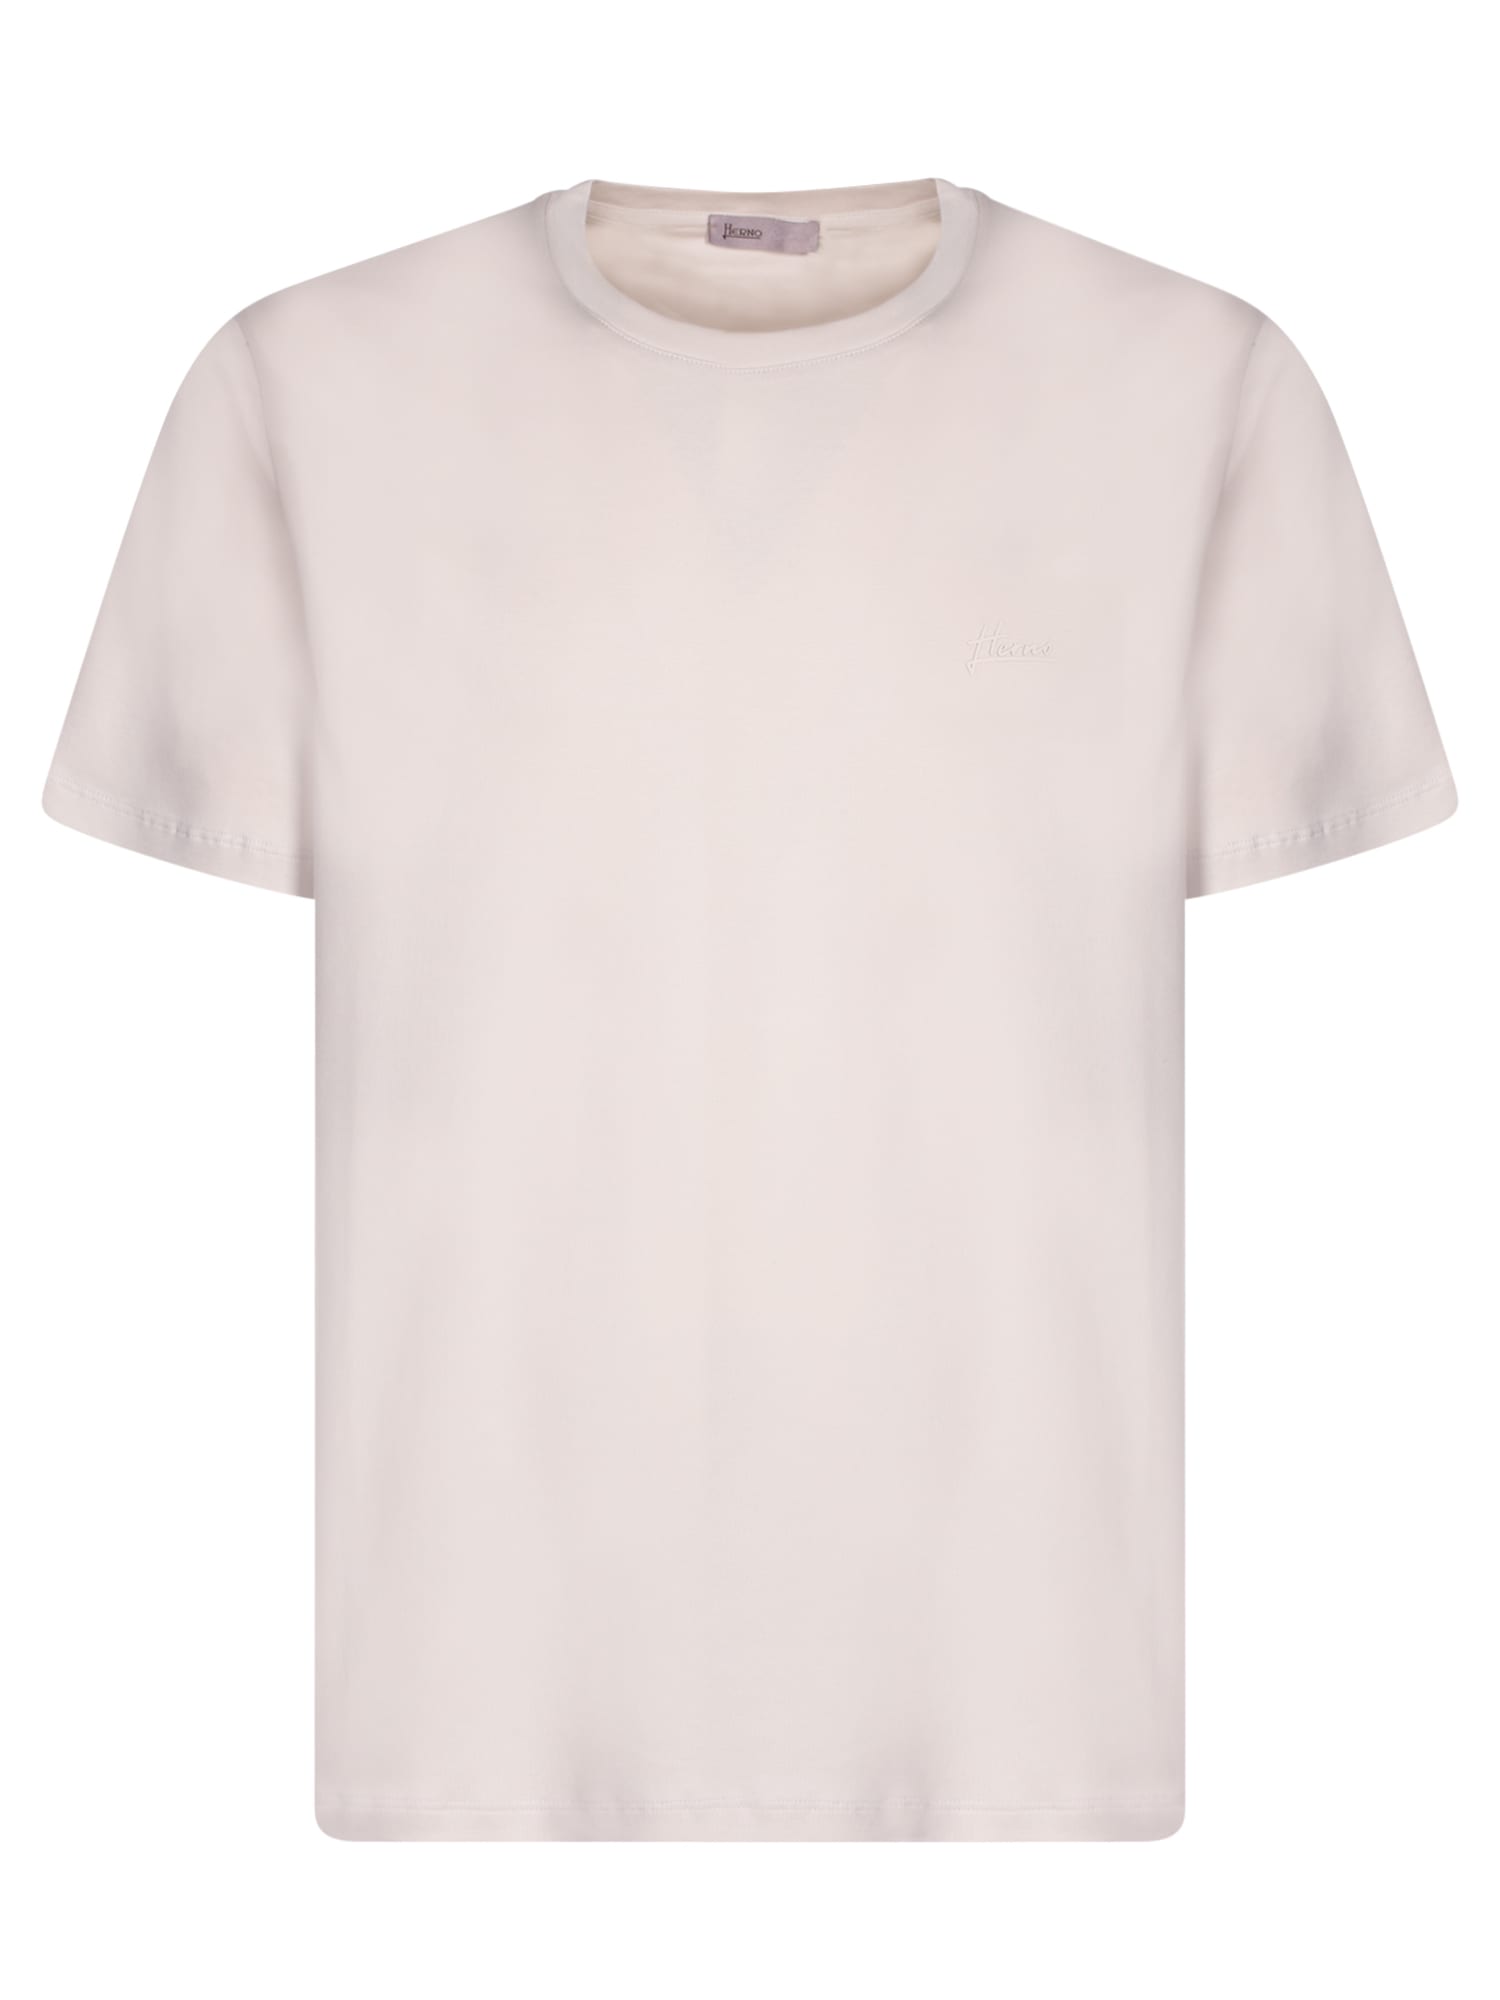 Herno Resort Chantilly T-shirt In White